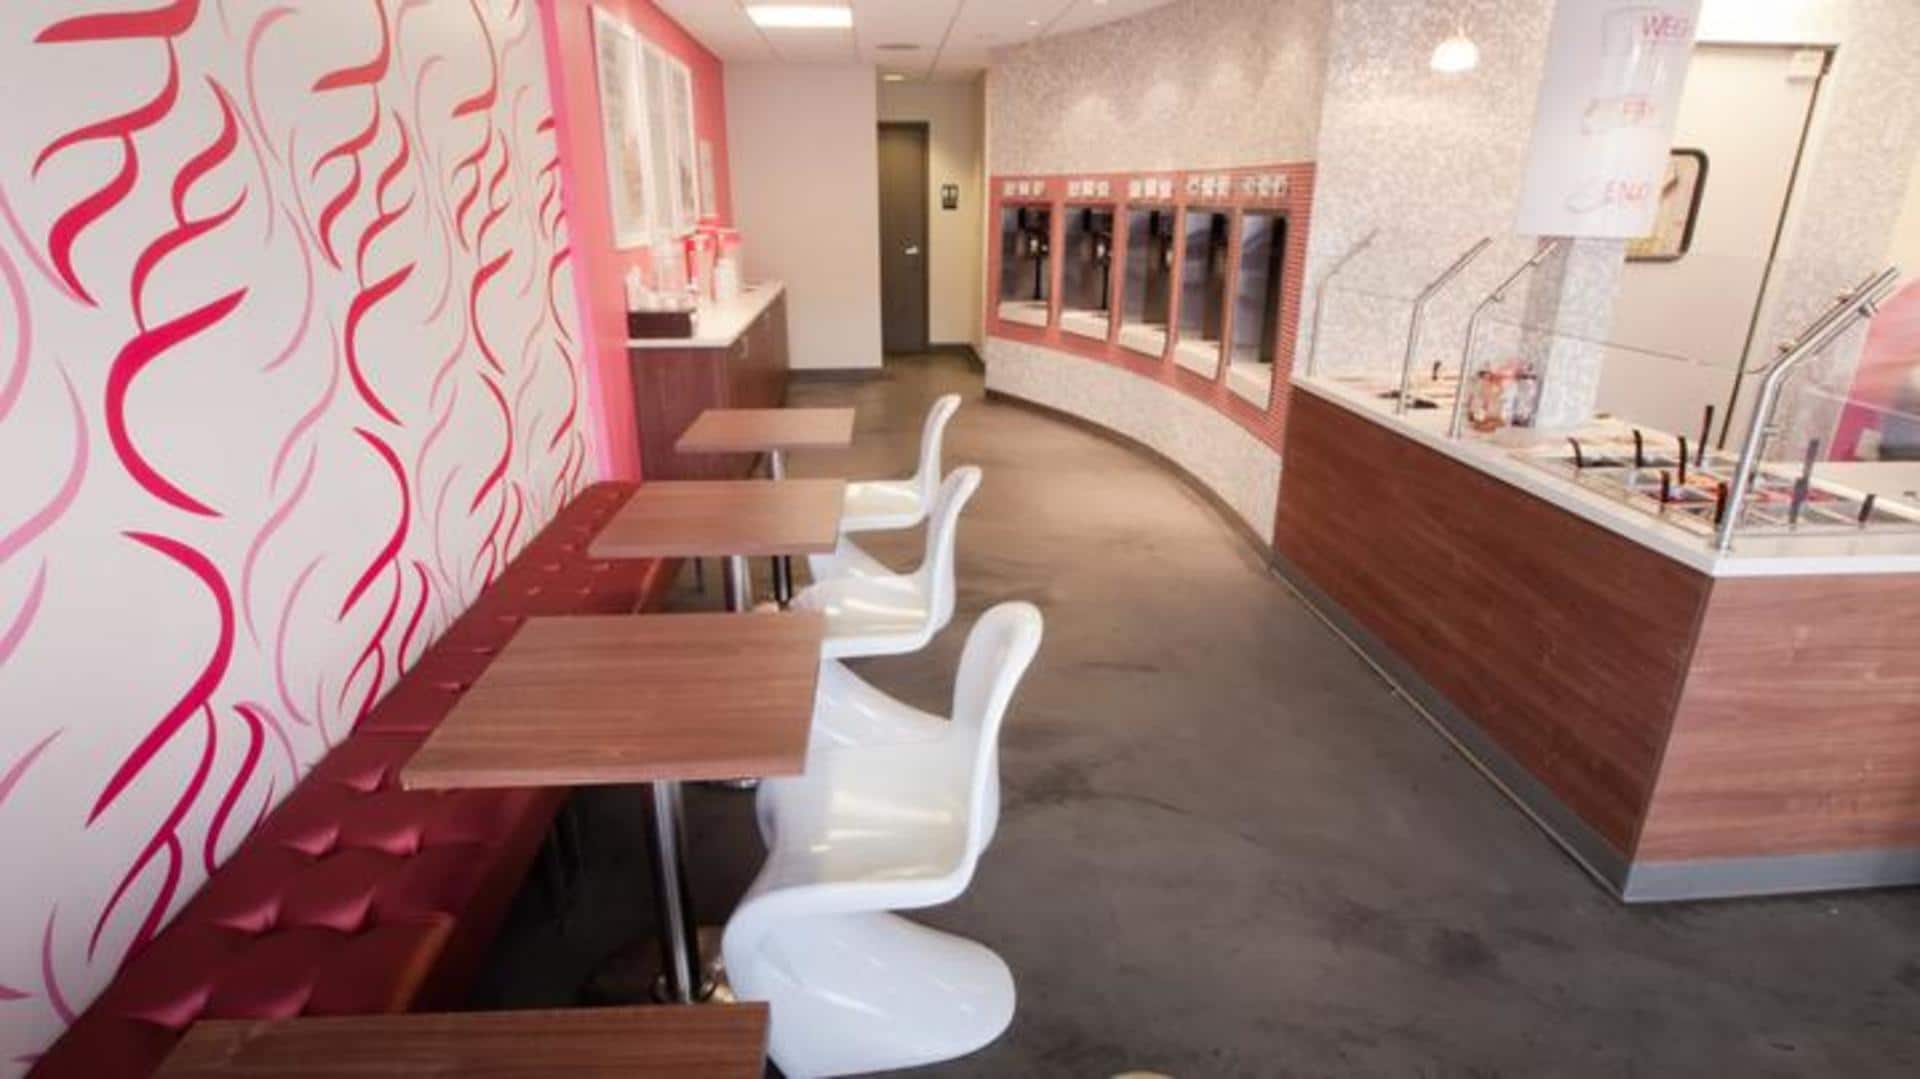 Expert reveals why restaurants are opting for fluid-design interiors